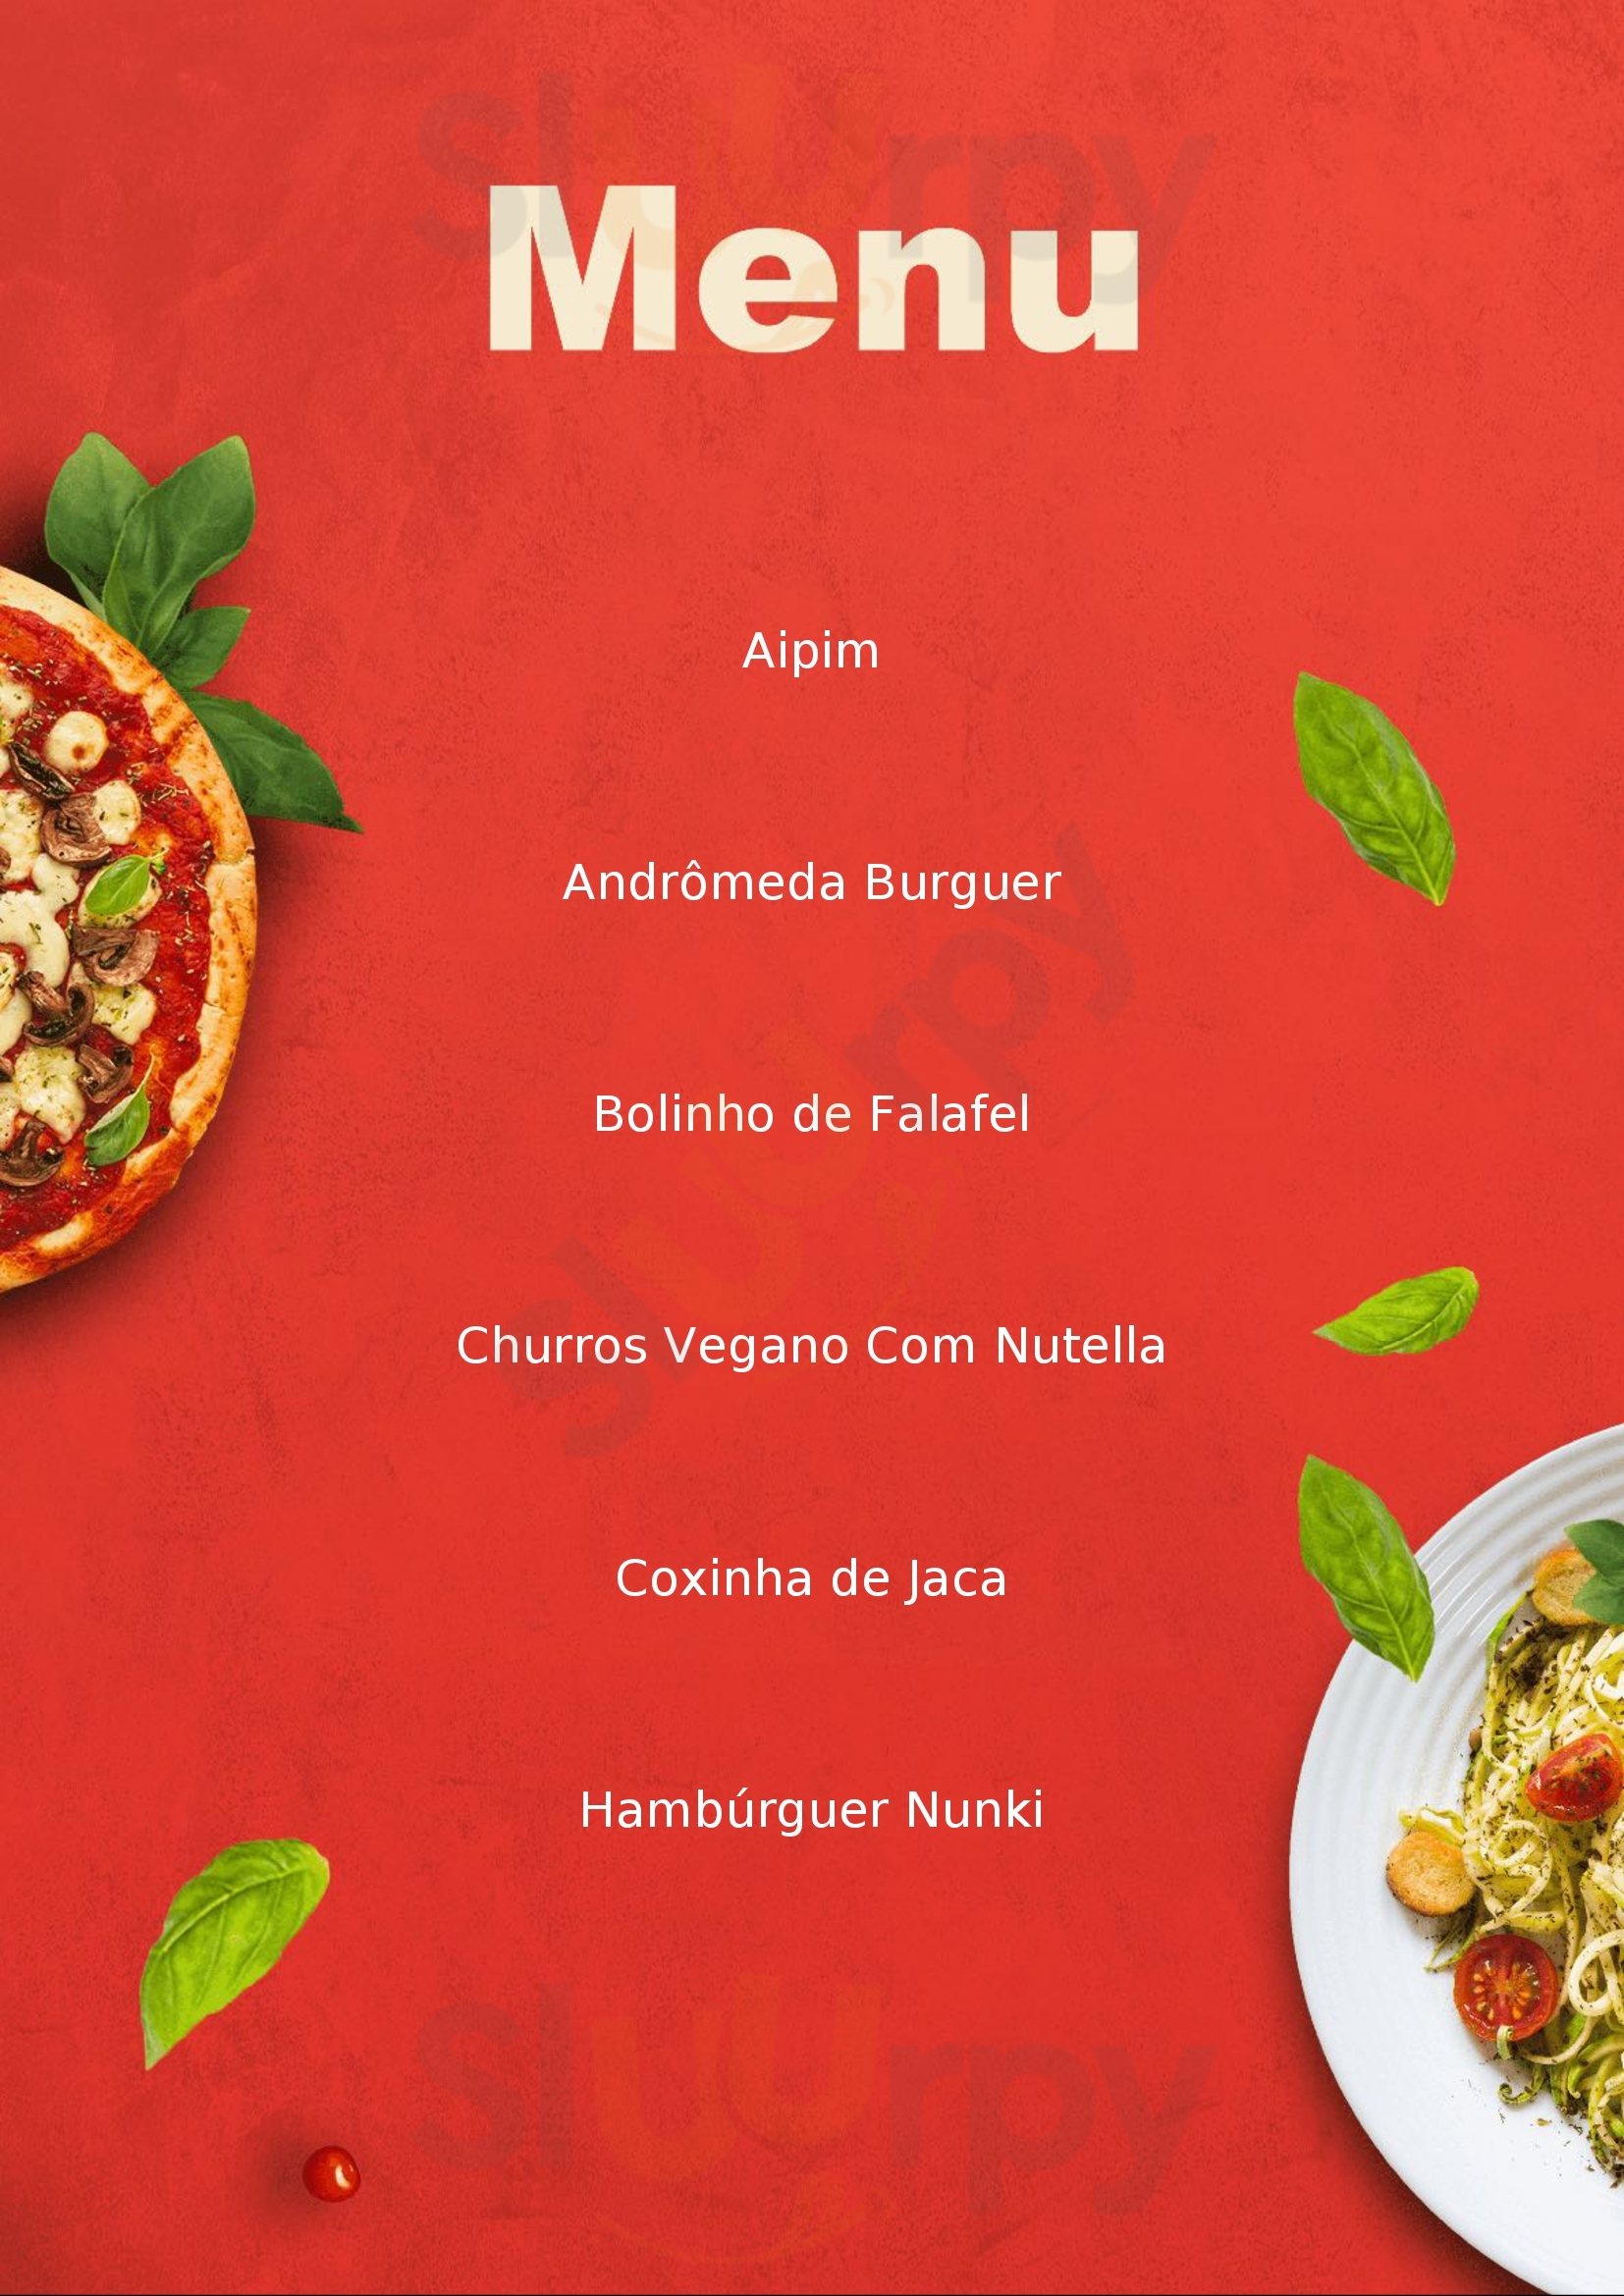 Ahimsa Vegan Burgers Florianópolis Menu - 1